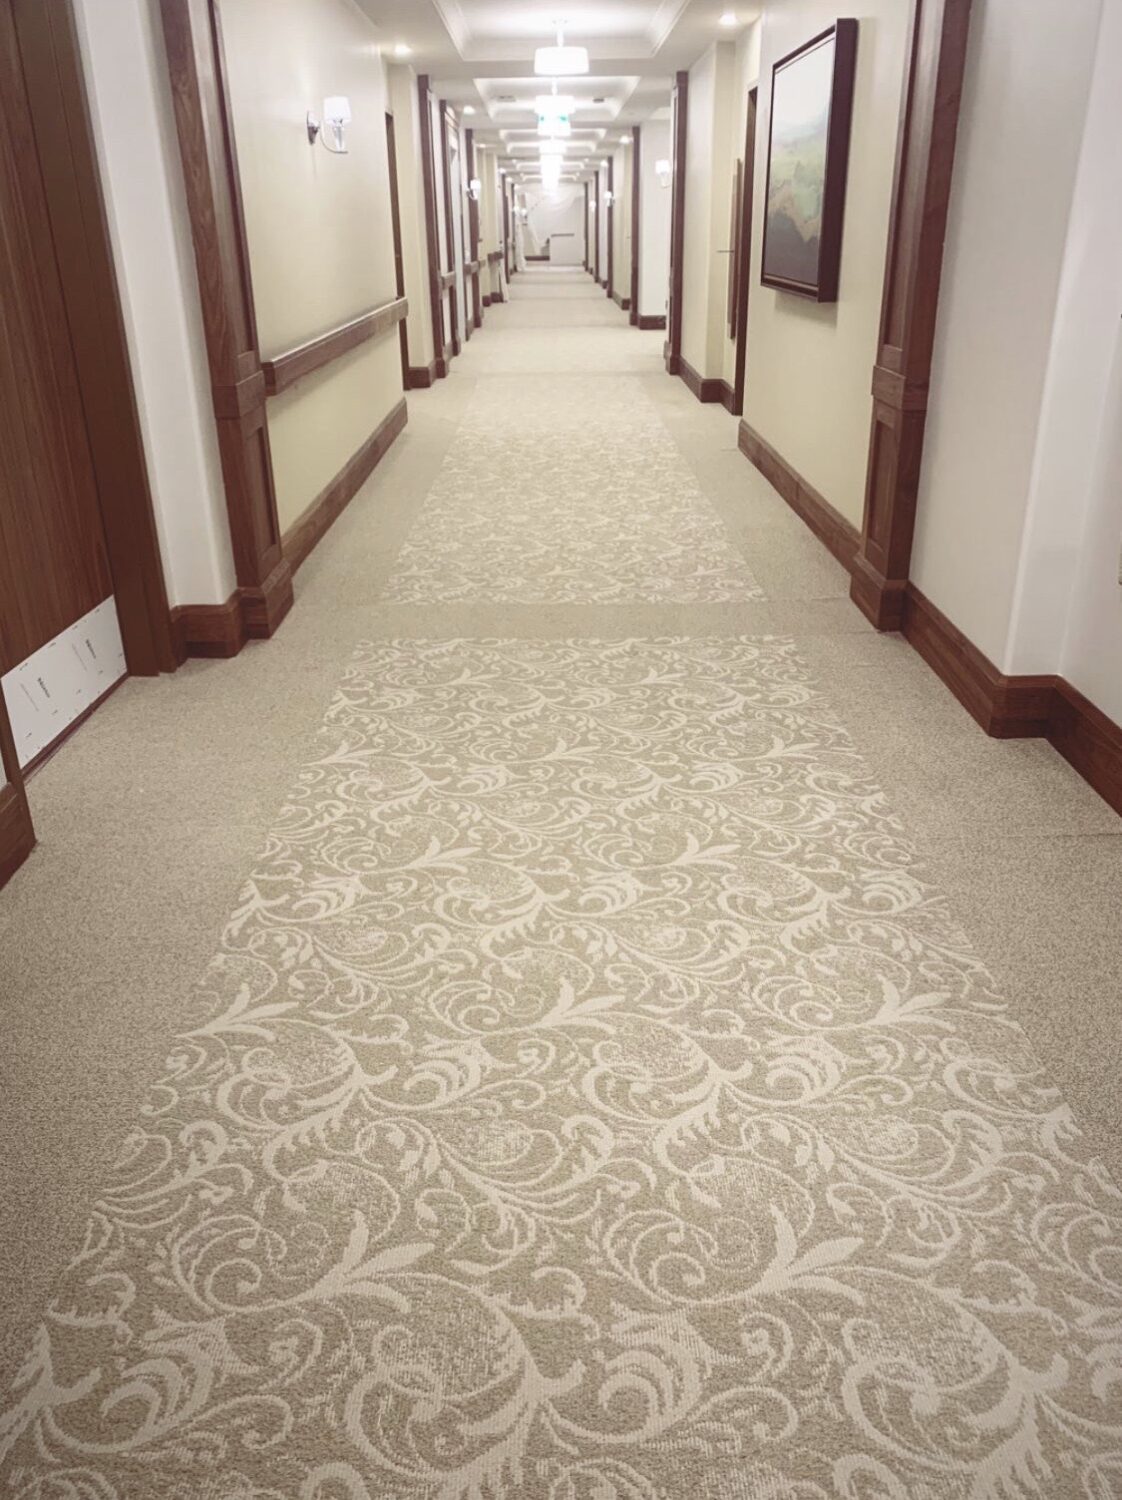 Retirement Residence -commercial flooring contractor-hallway carpet